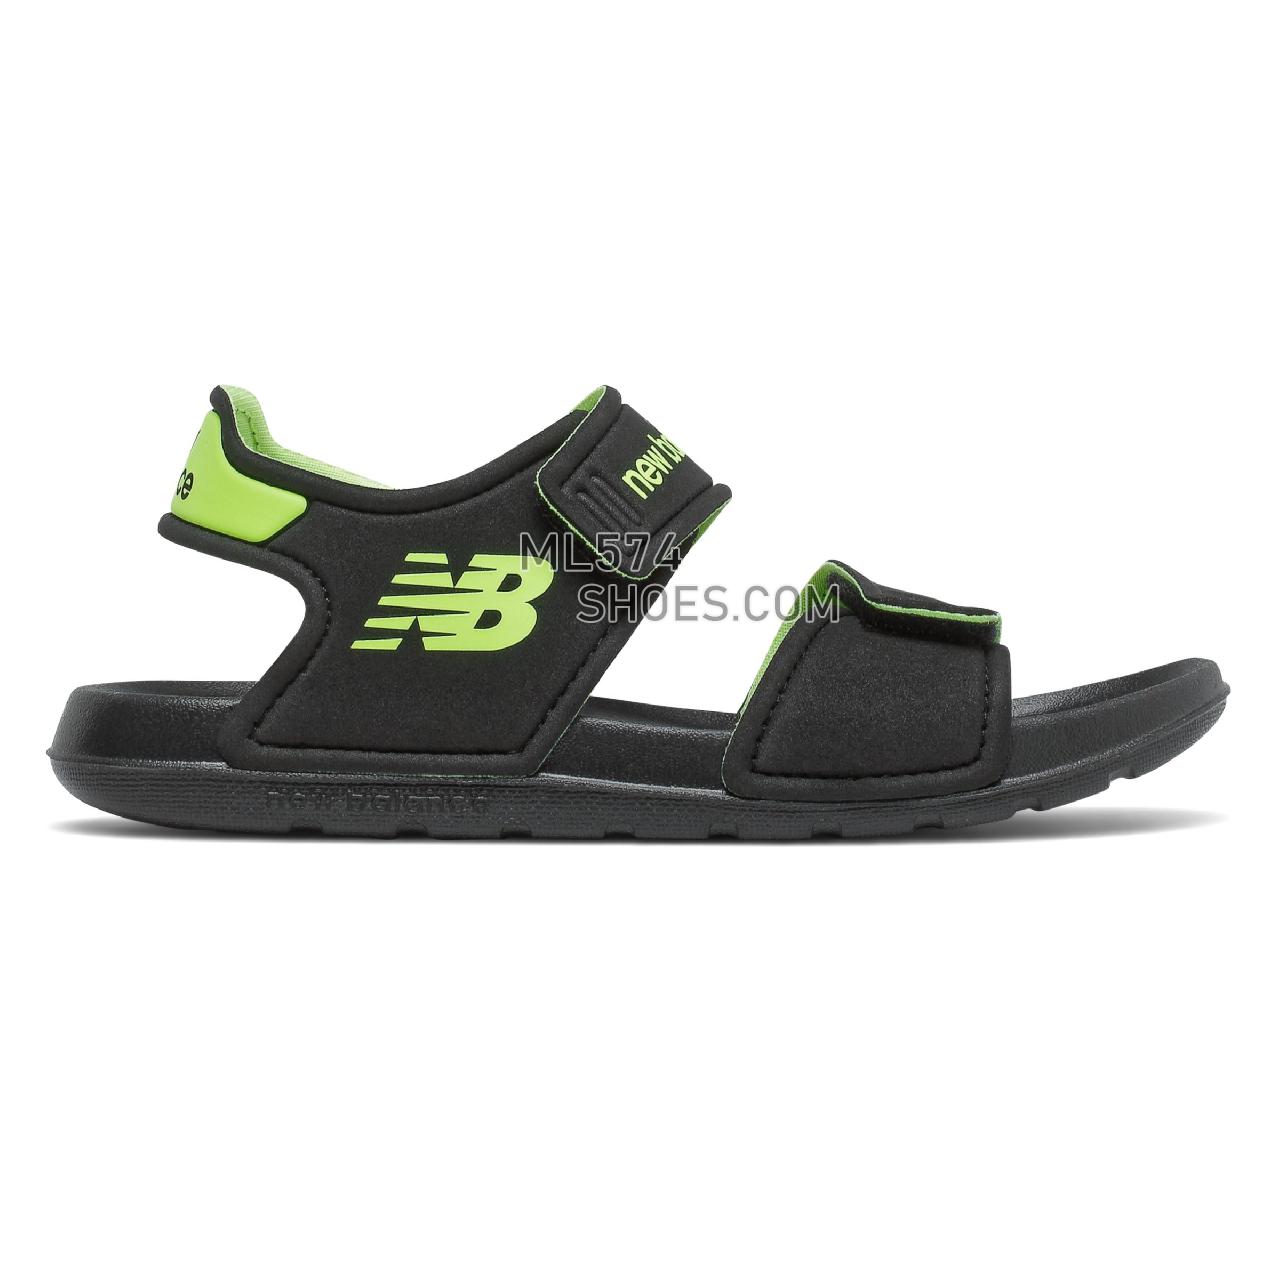 New Balance SPSD - Unisex Men's Women's Sandals - Black with Lime Glo - YOSPSDKL